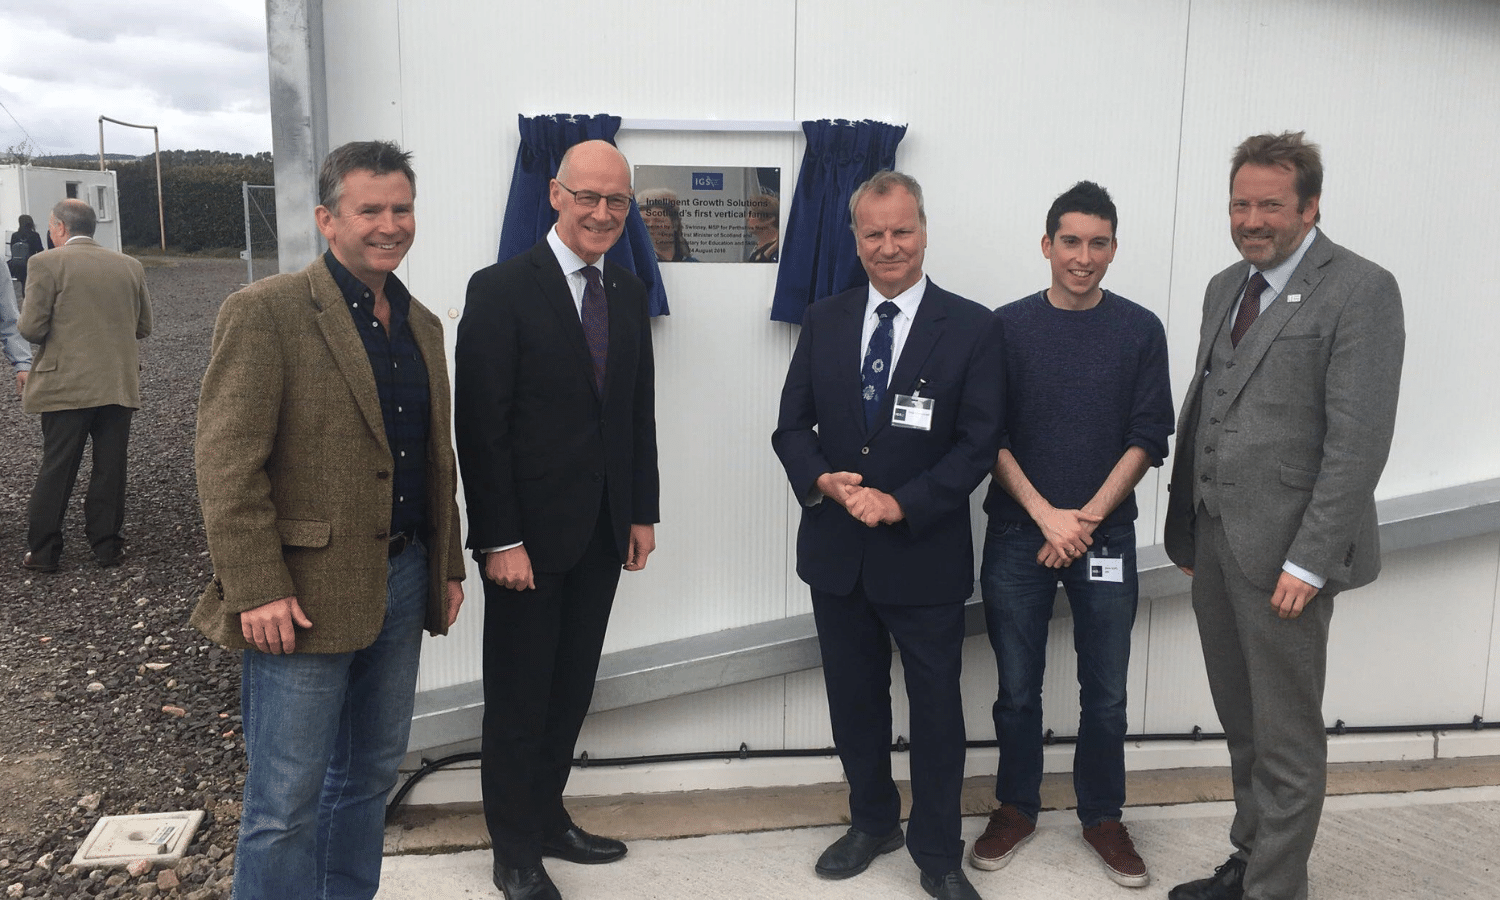 John opens Scotland’s first indoor vertical farm